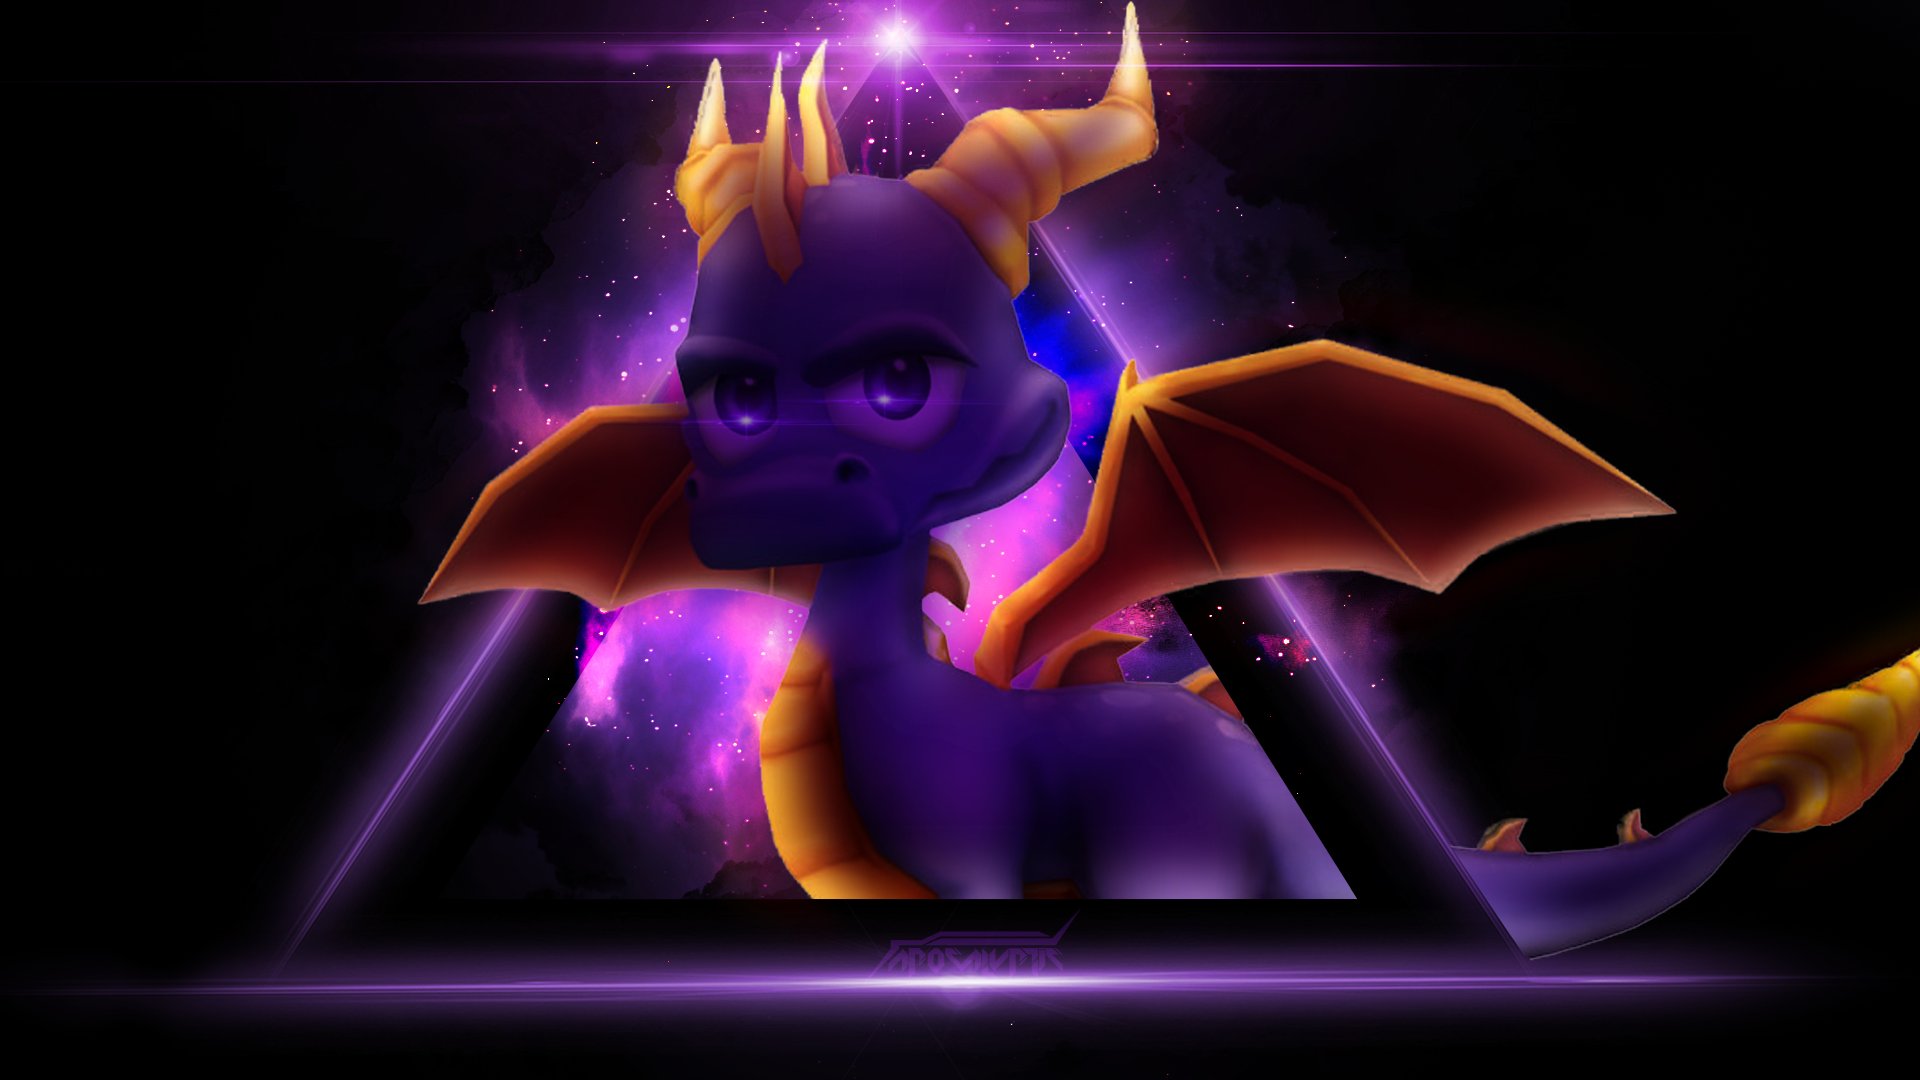 Video Game Spyro the Dragon HD Wallpaper | Background Image